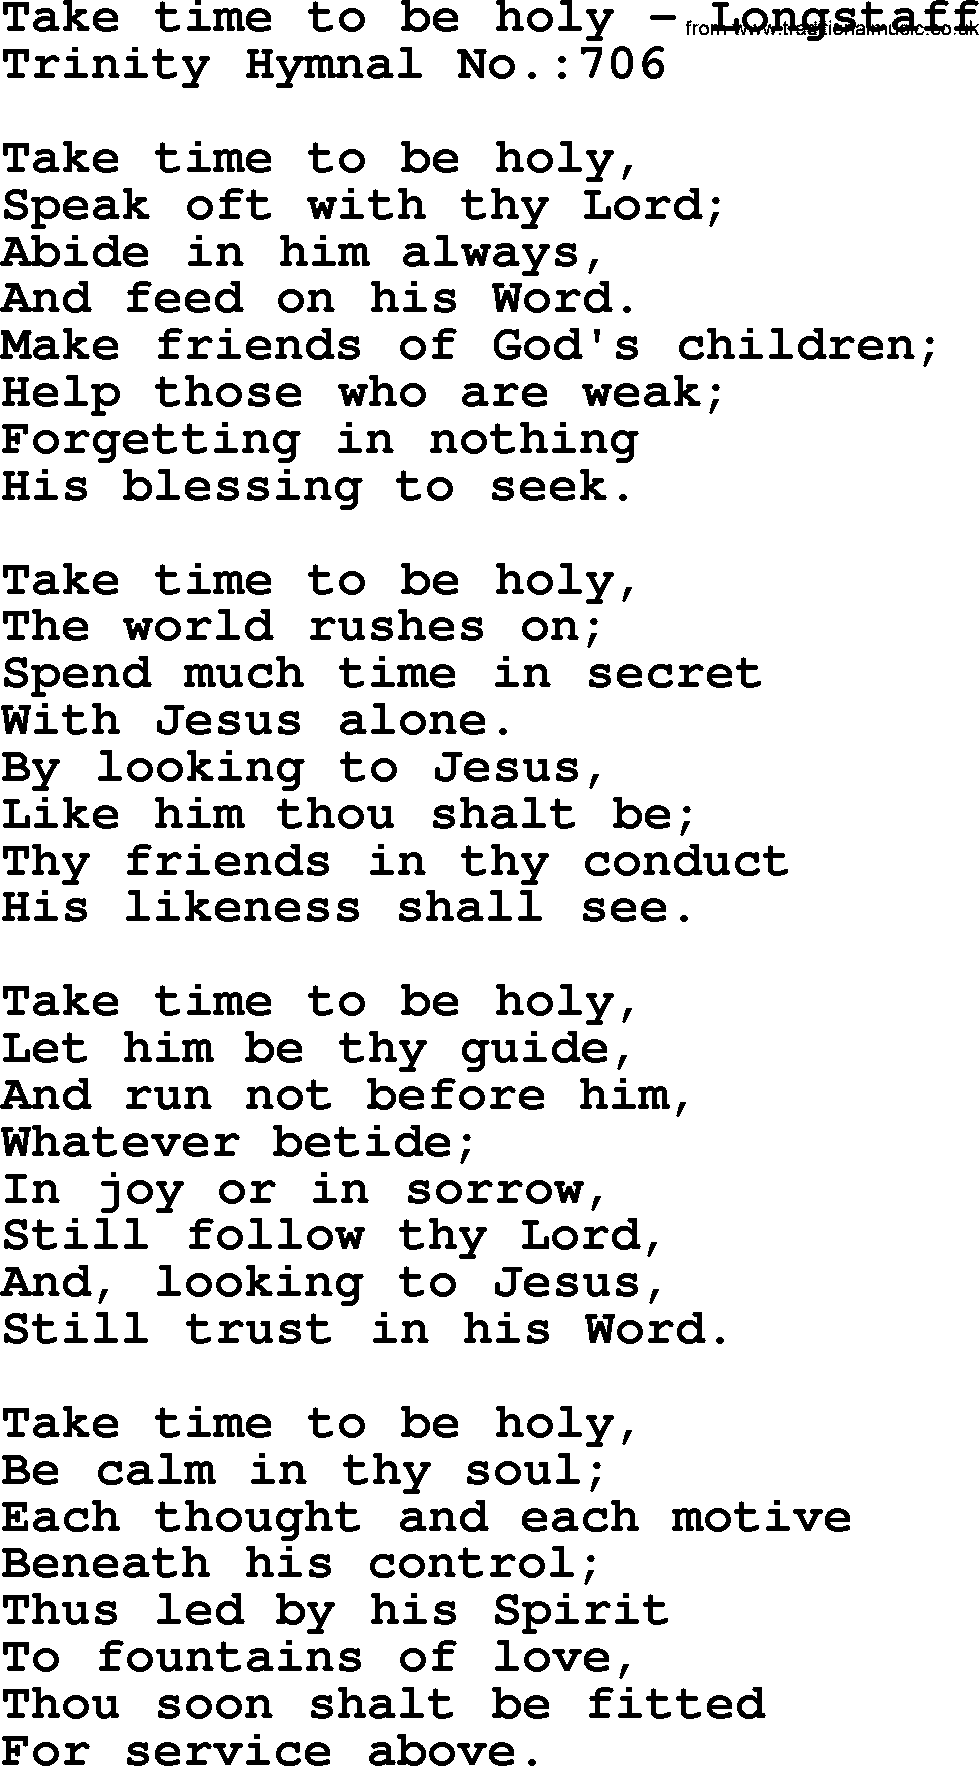 Trinity Hymnal Hymn: Take Time To Be Holy--Longstaff, lyrics with midi music